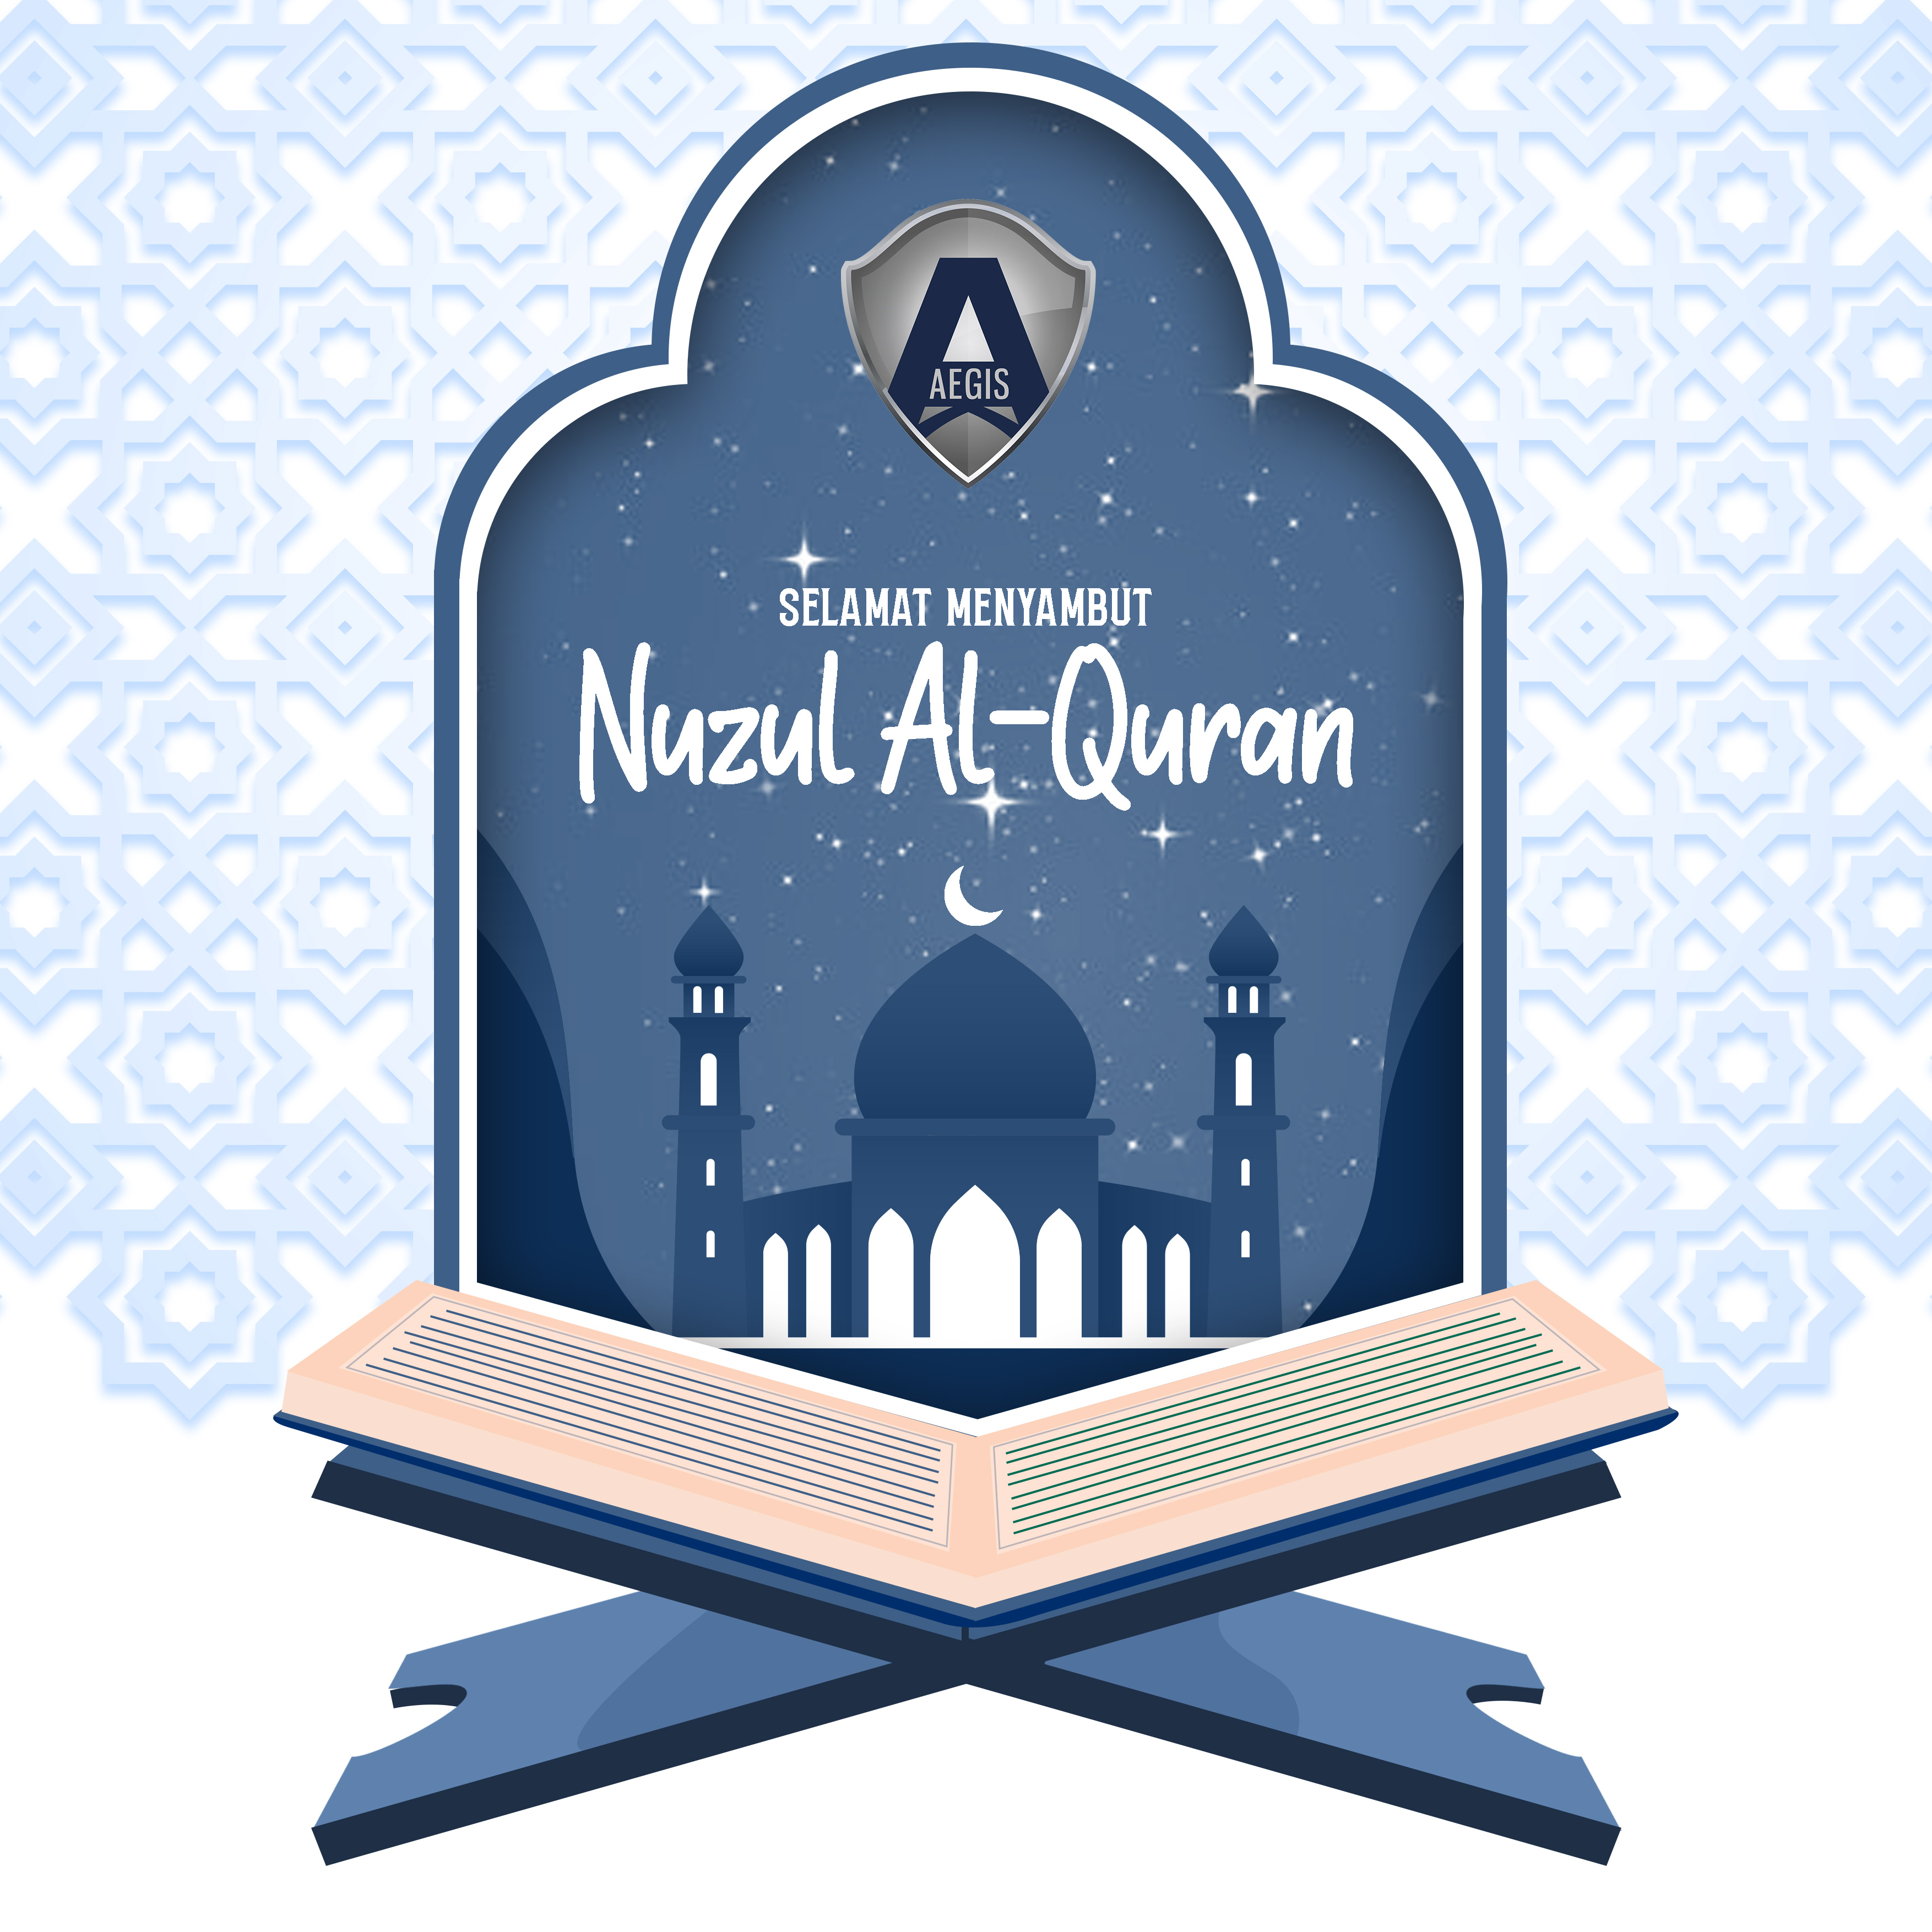 Selamat Menyambut Nuzul Al-Quran - AEGIS Group Brunei